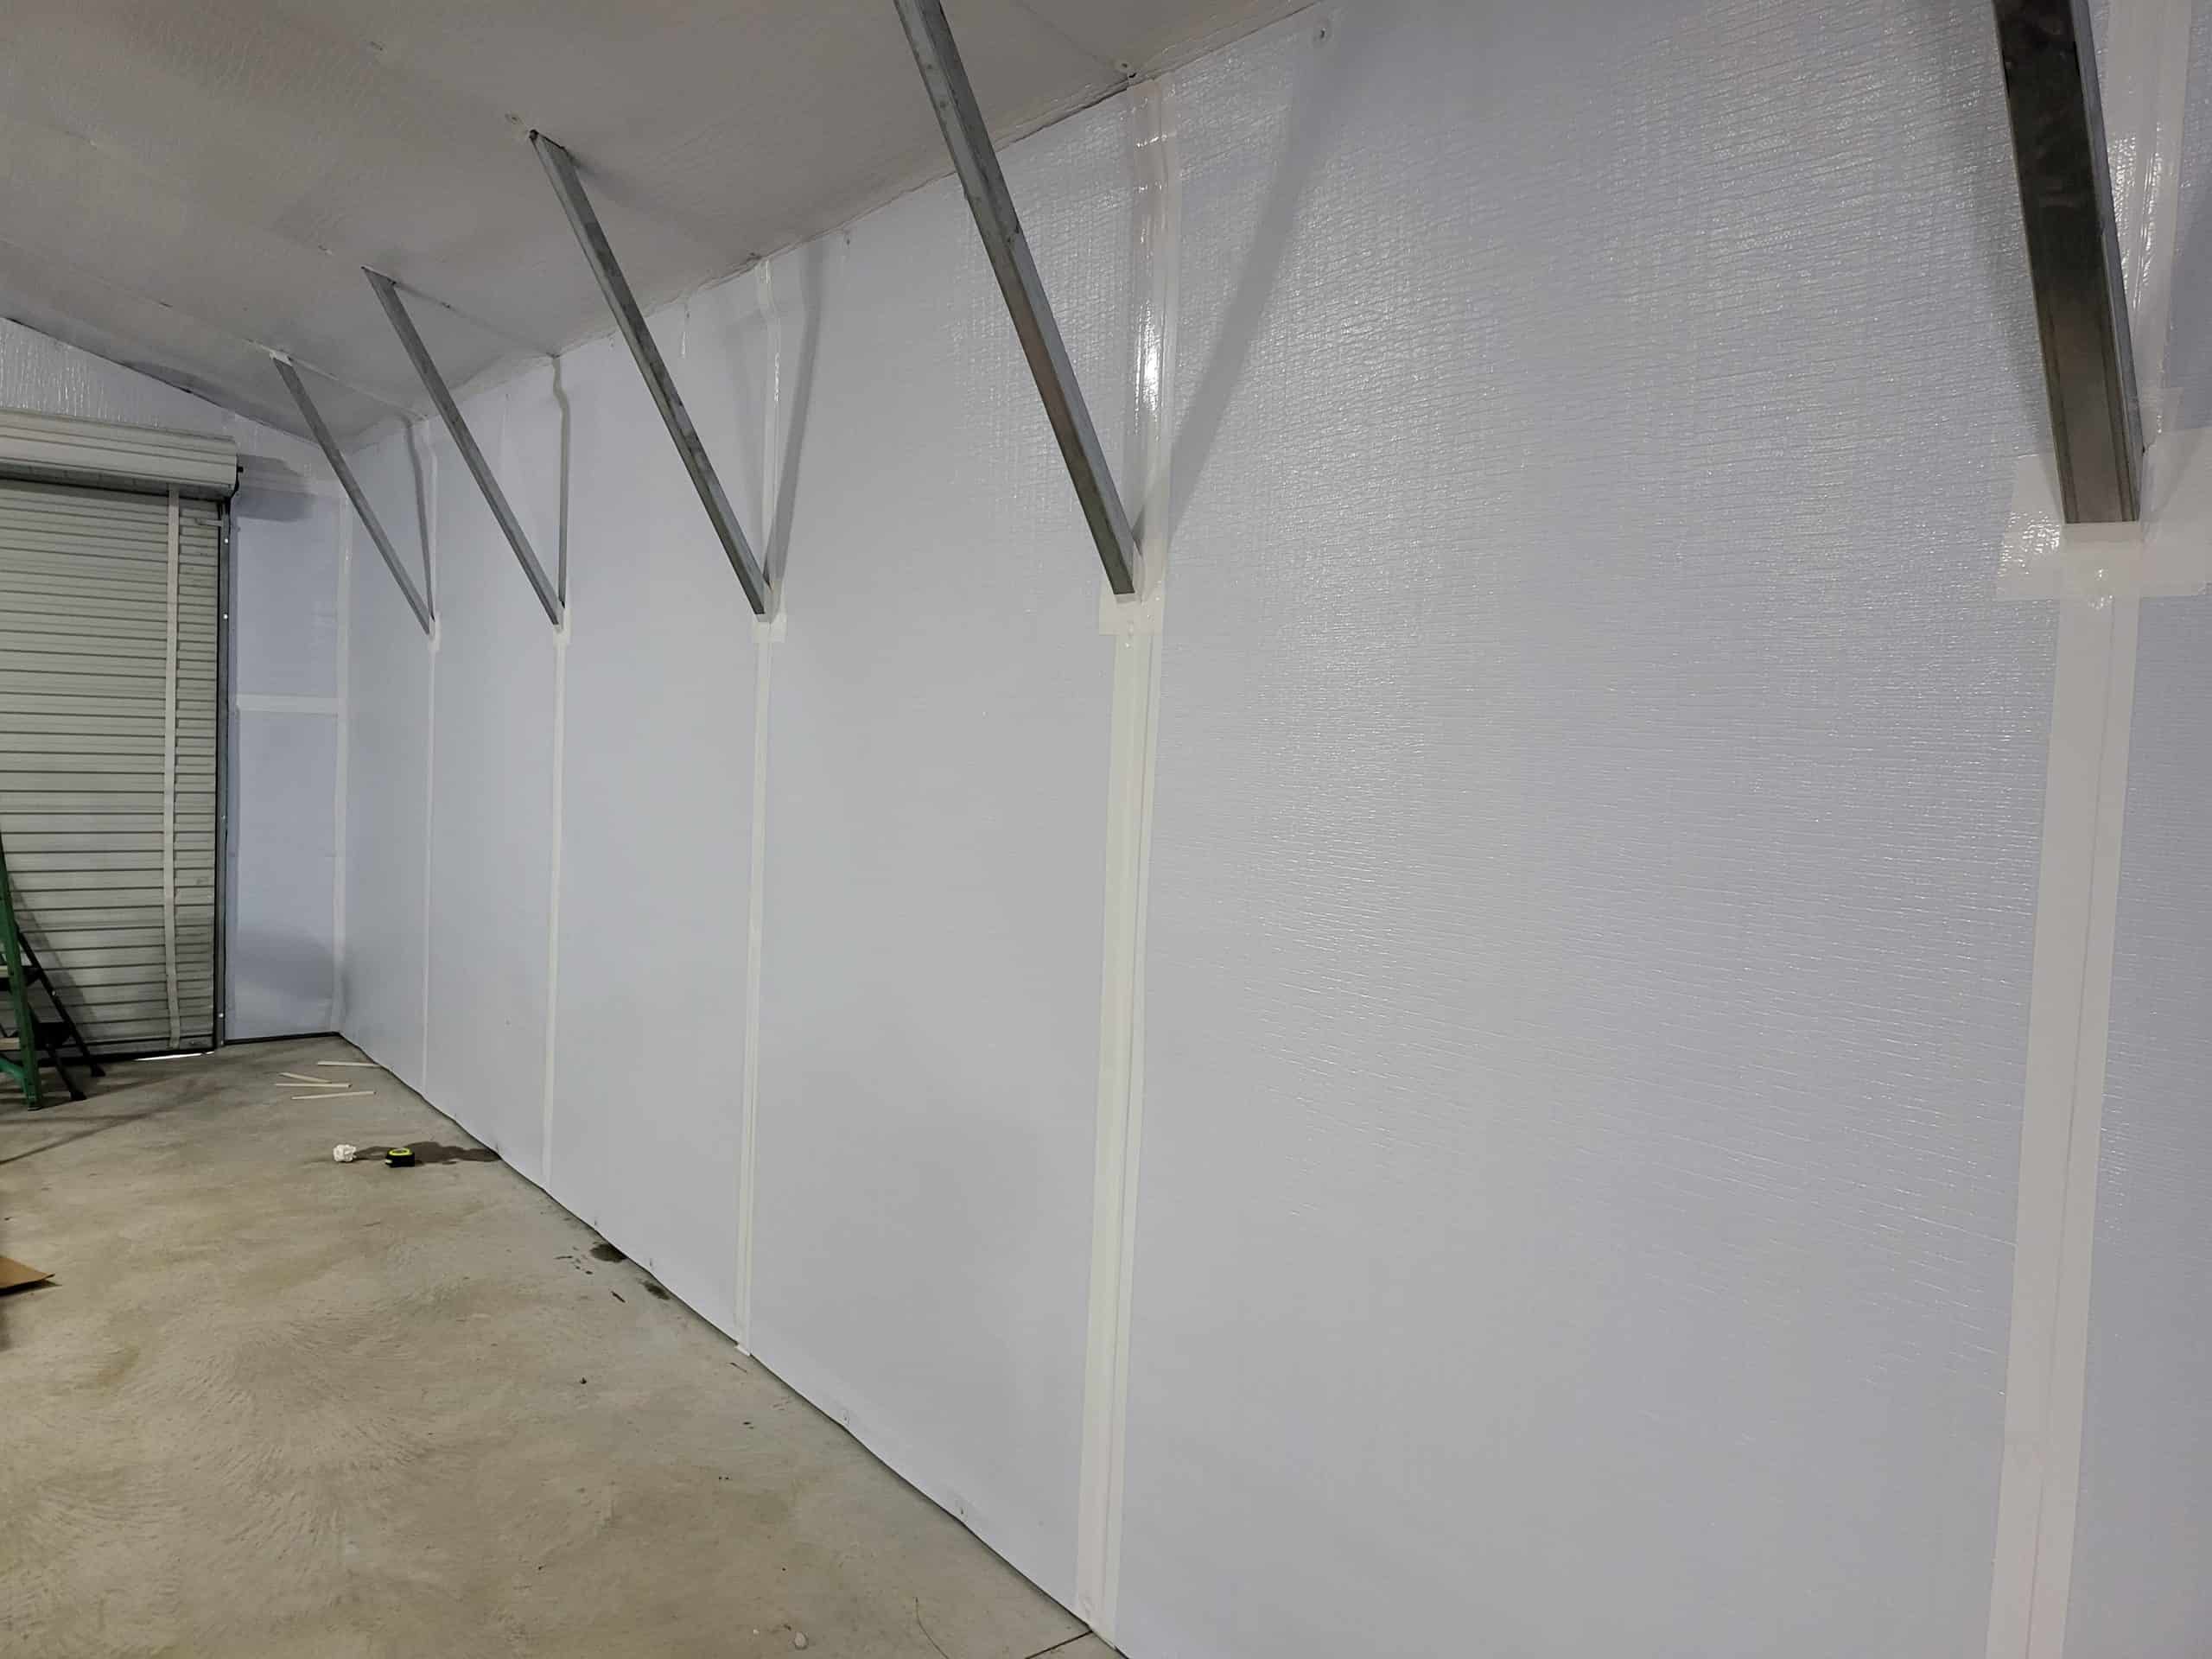 Double-Sided Radiant Barrier Foil + Foil – BlueTex Insulation